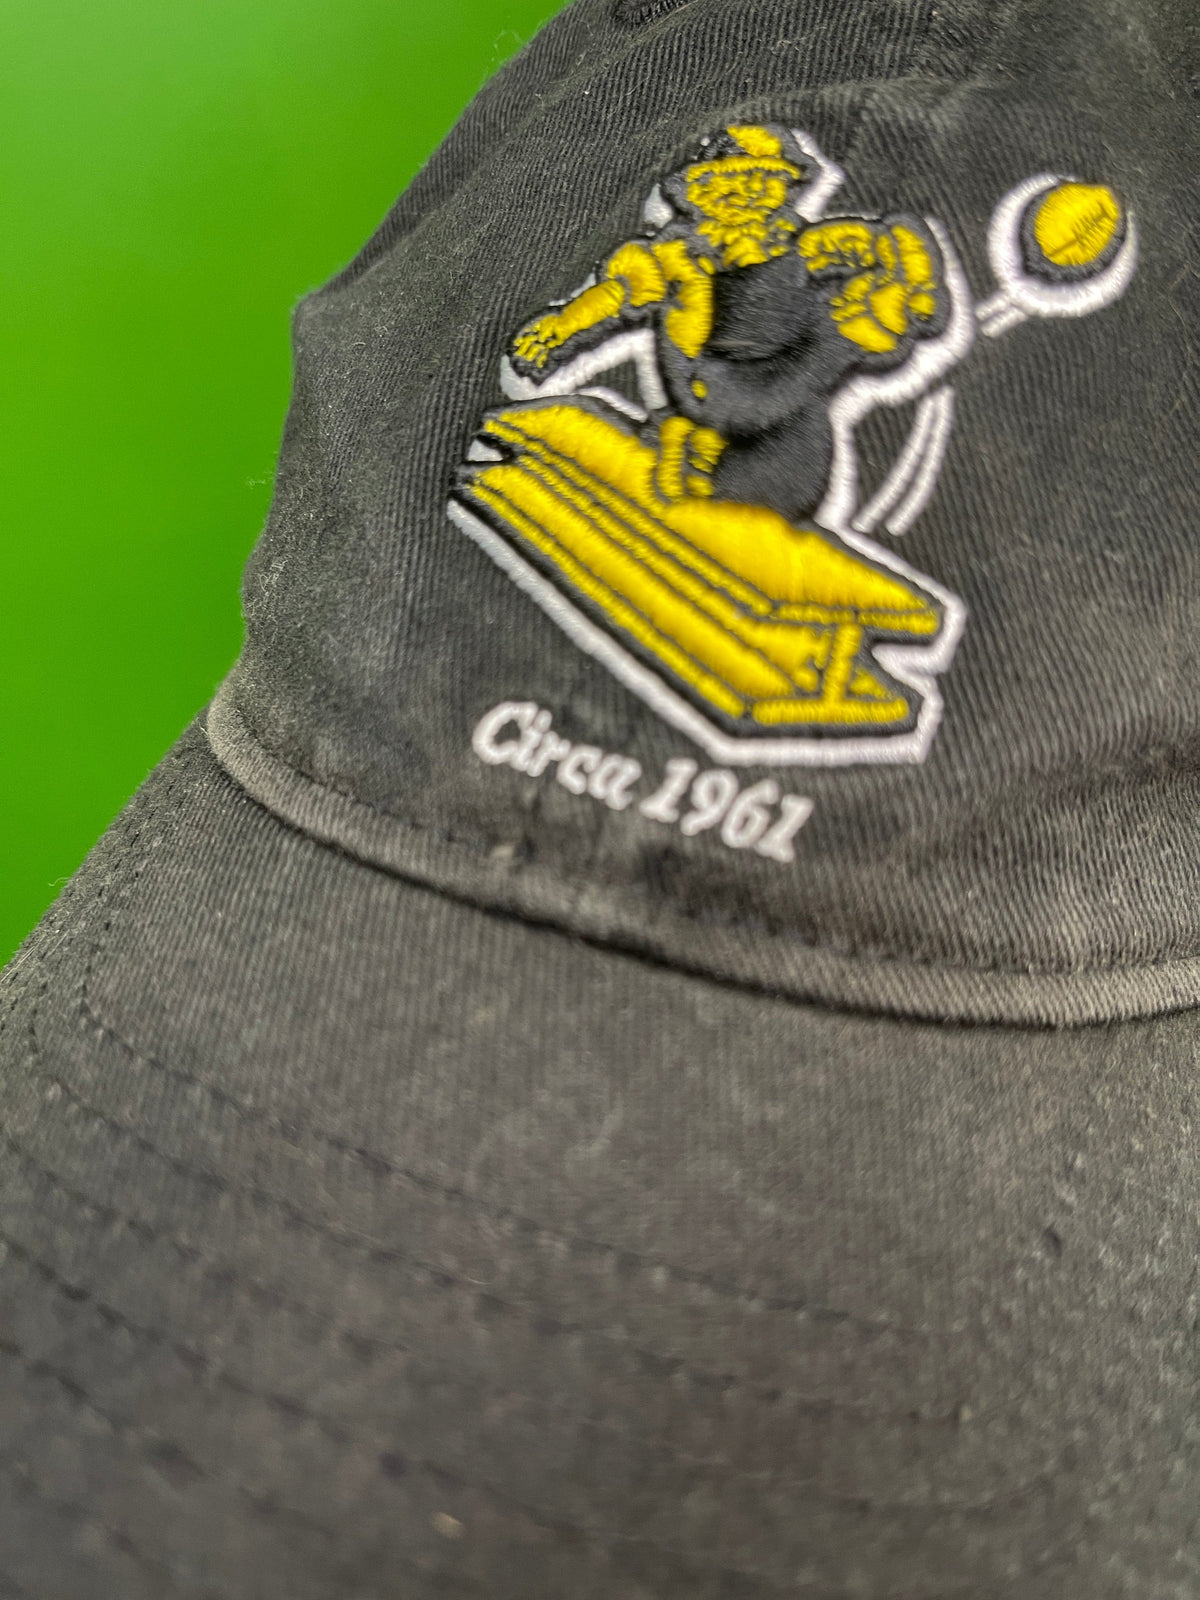 NFL Pittsburgh Steelers Reebok Vintage Collection 1961 Hat/Cap OSFA